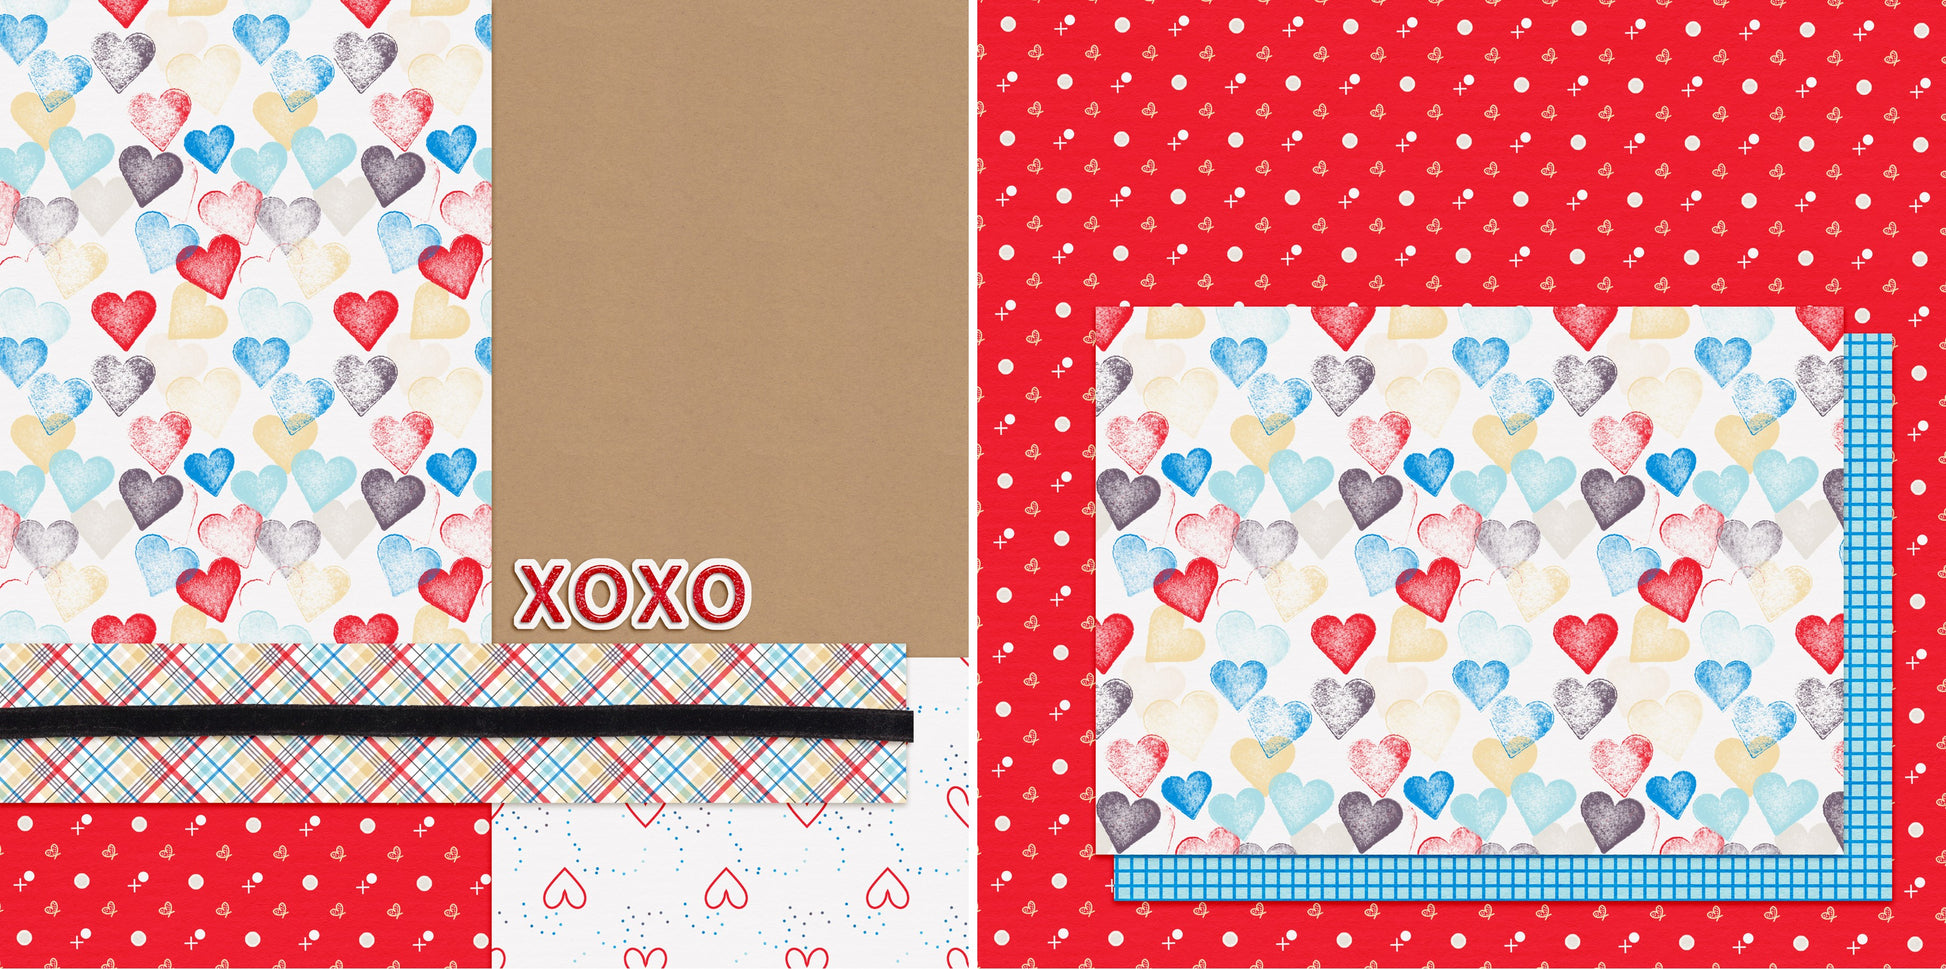 XOXO NPM - 4747 - EZscrapbooks Scrapbook Layouts Love - Valentine